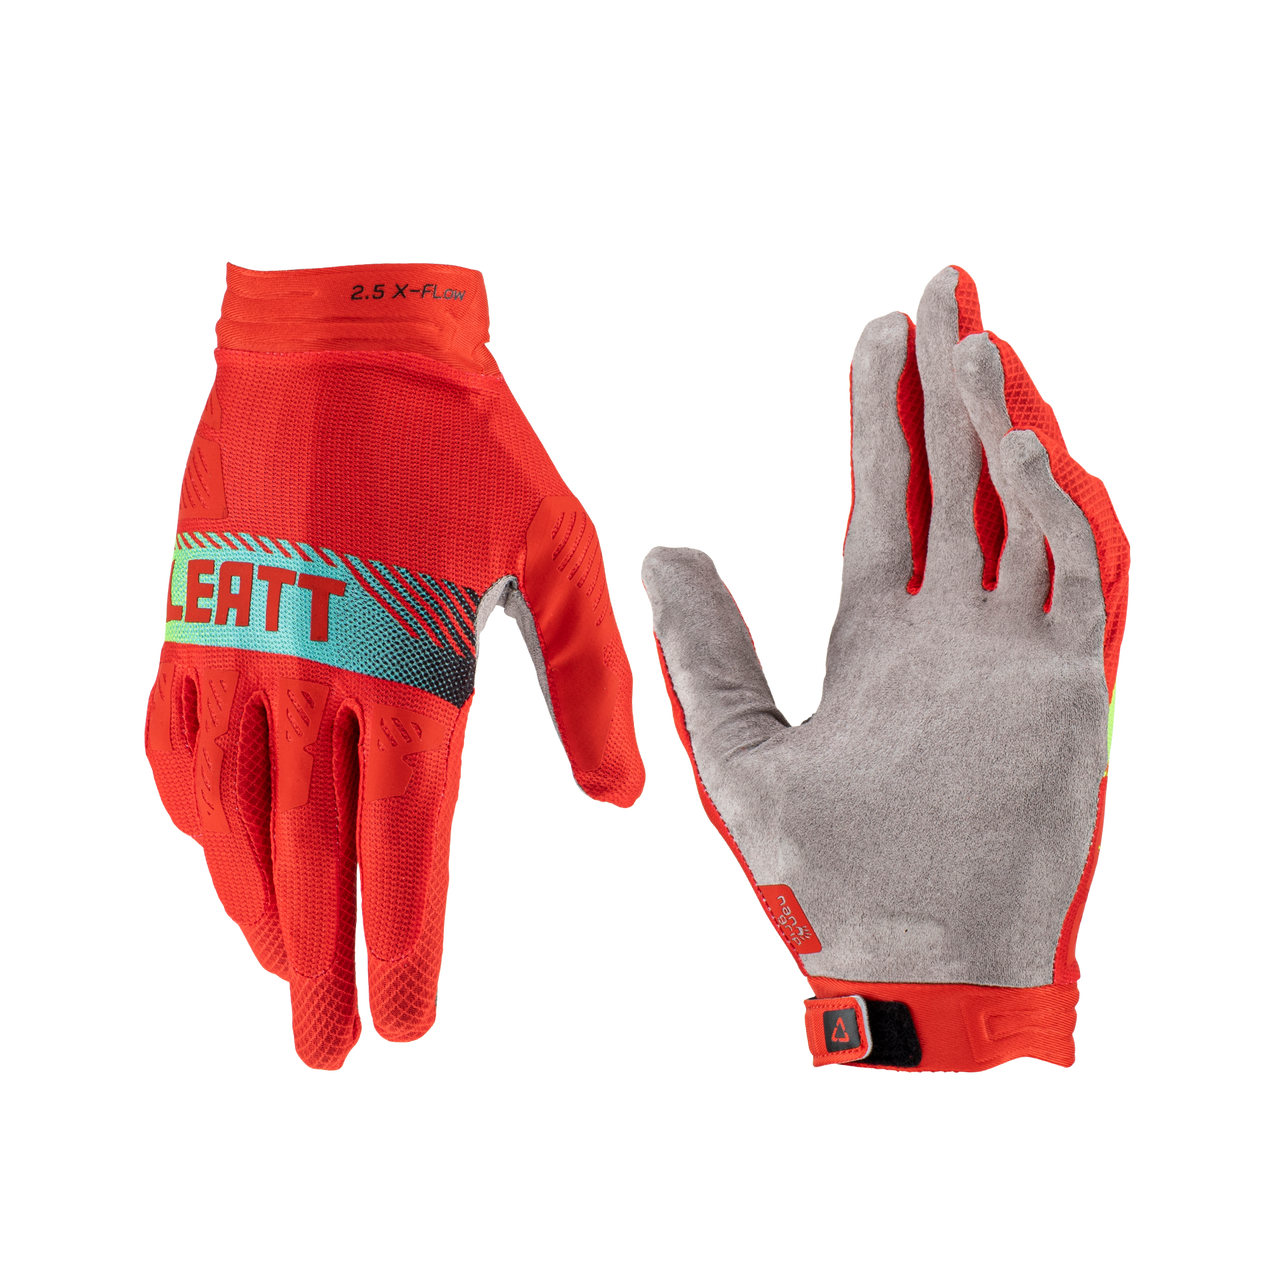 Leatt Moto 2.5 X-Flow Gloves - Motoxtremes